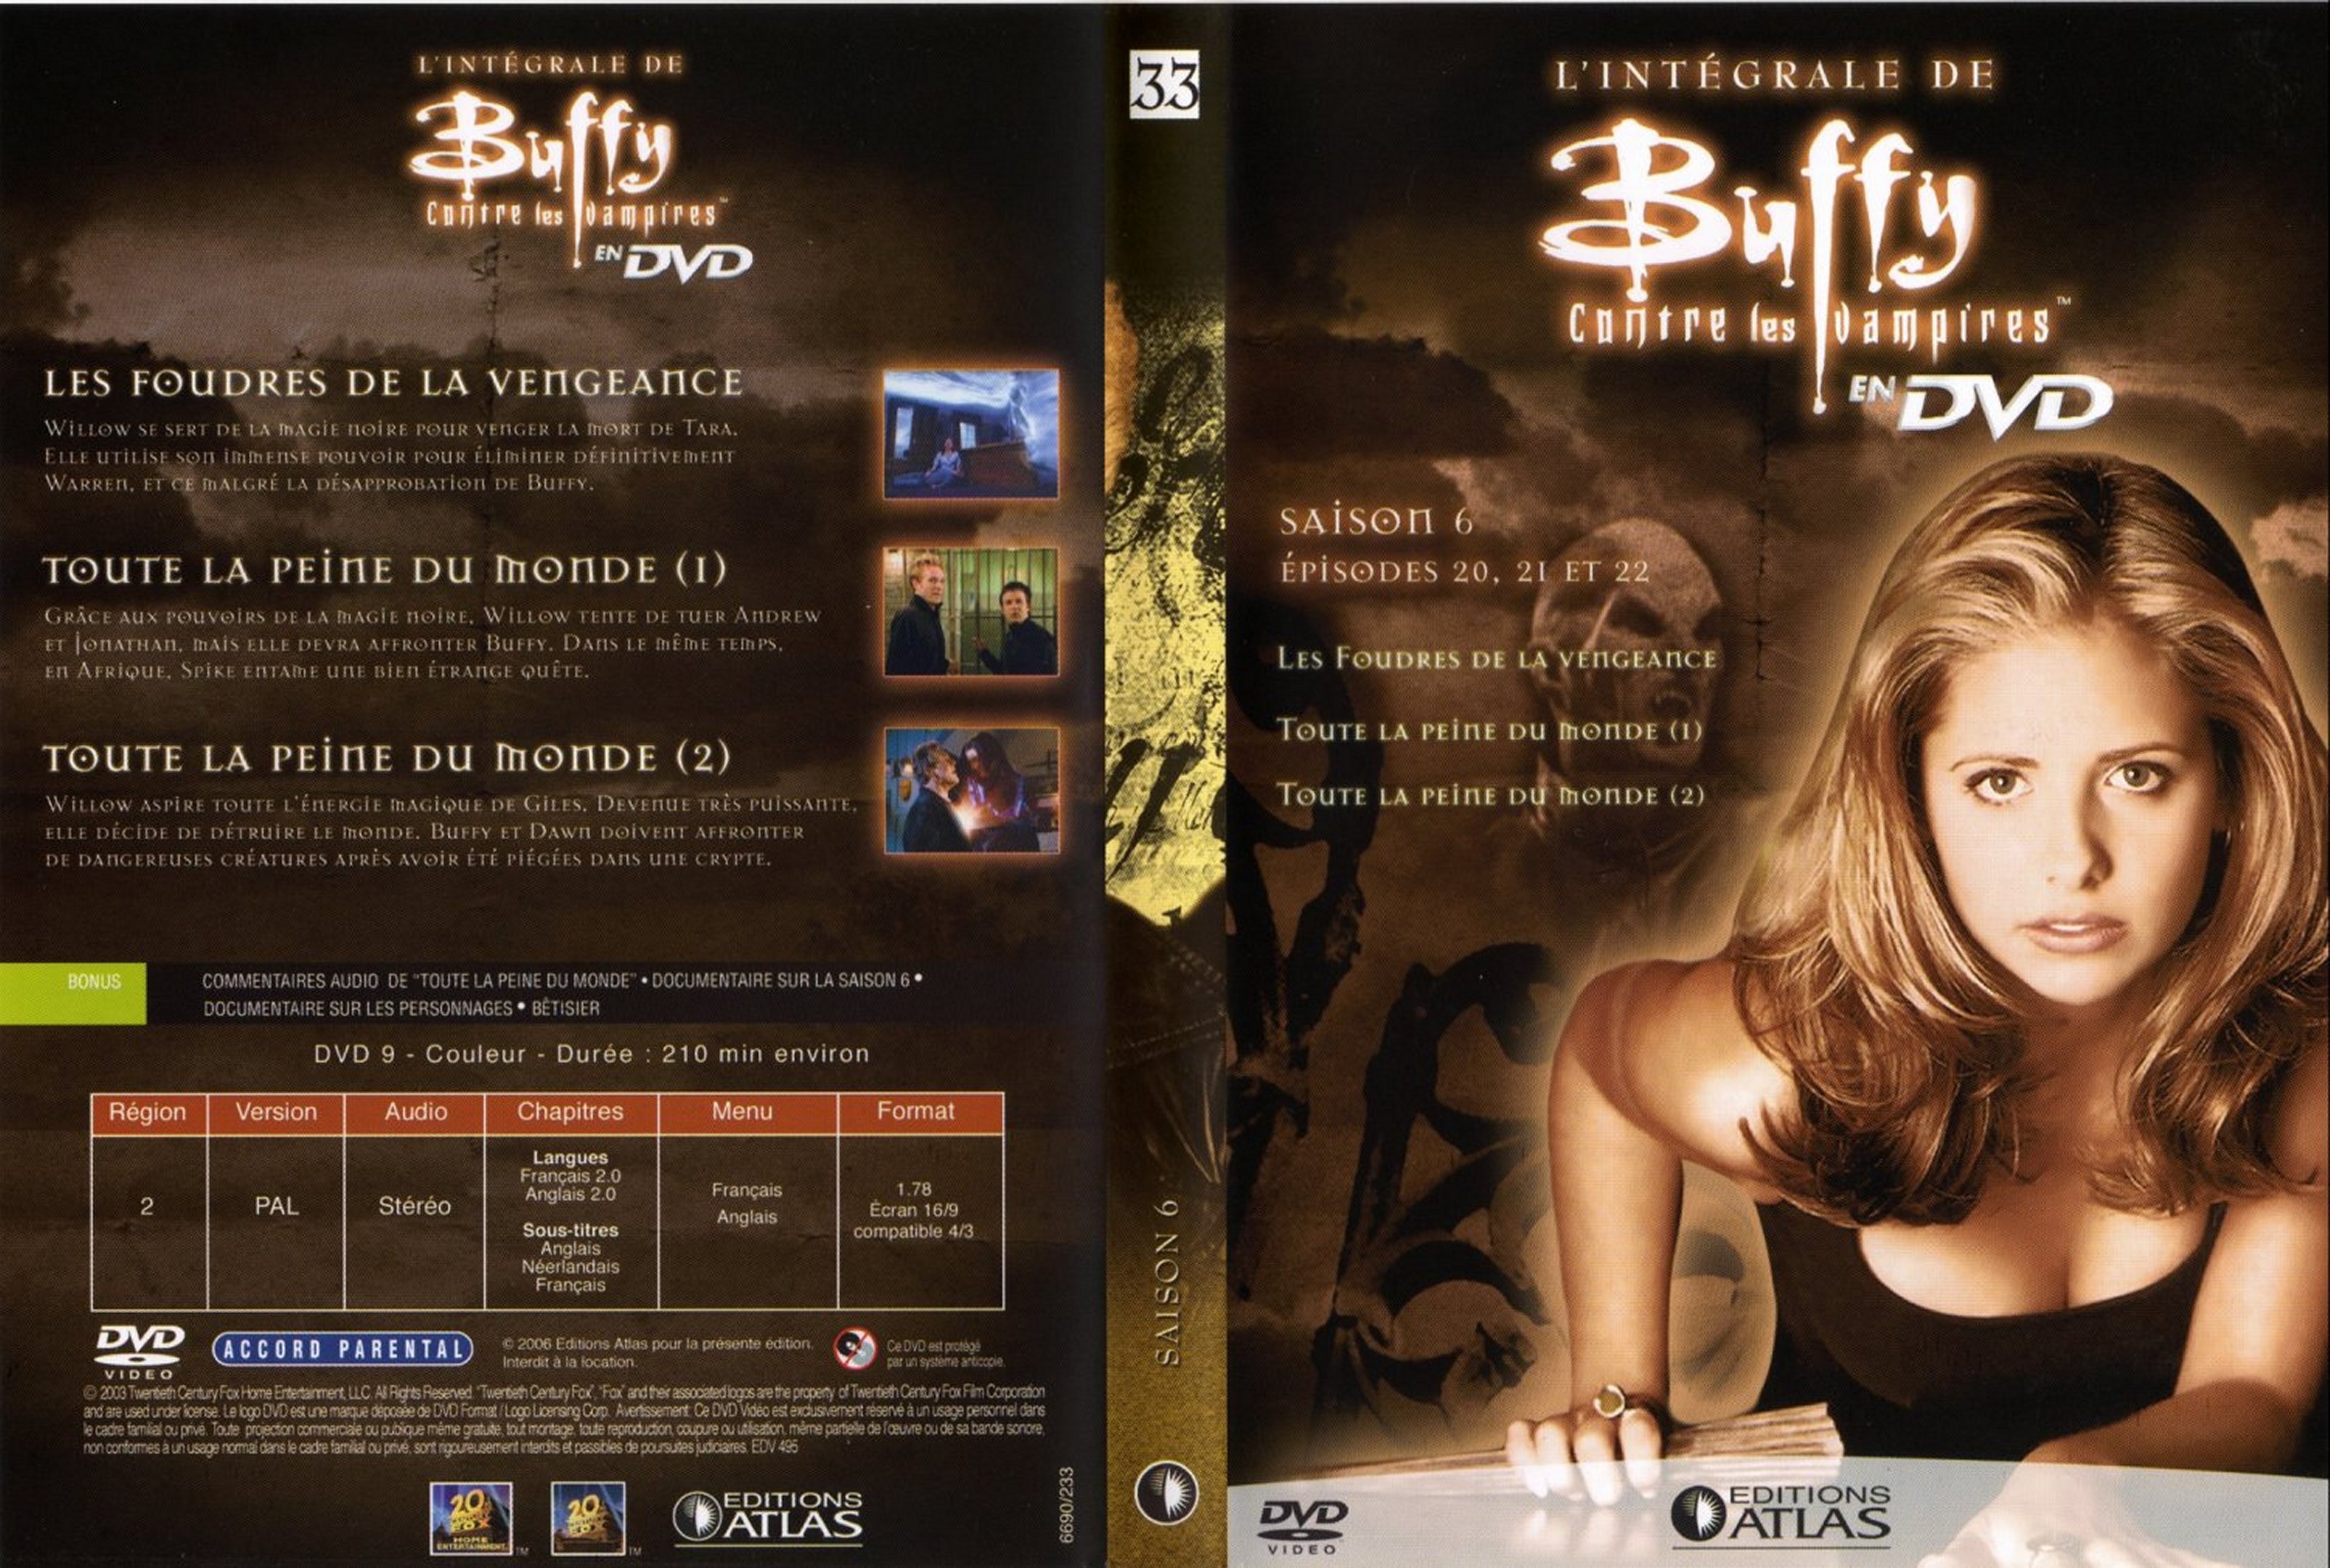 Jaquette DVD Buffy contre les vampires DVD 33 Ed Atlas